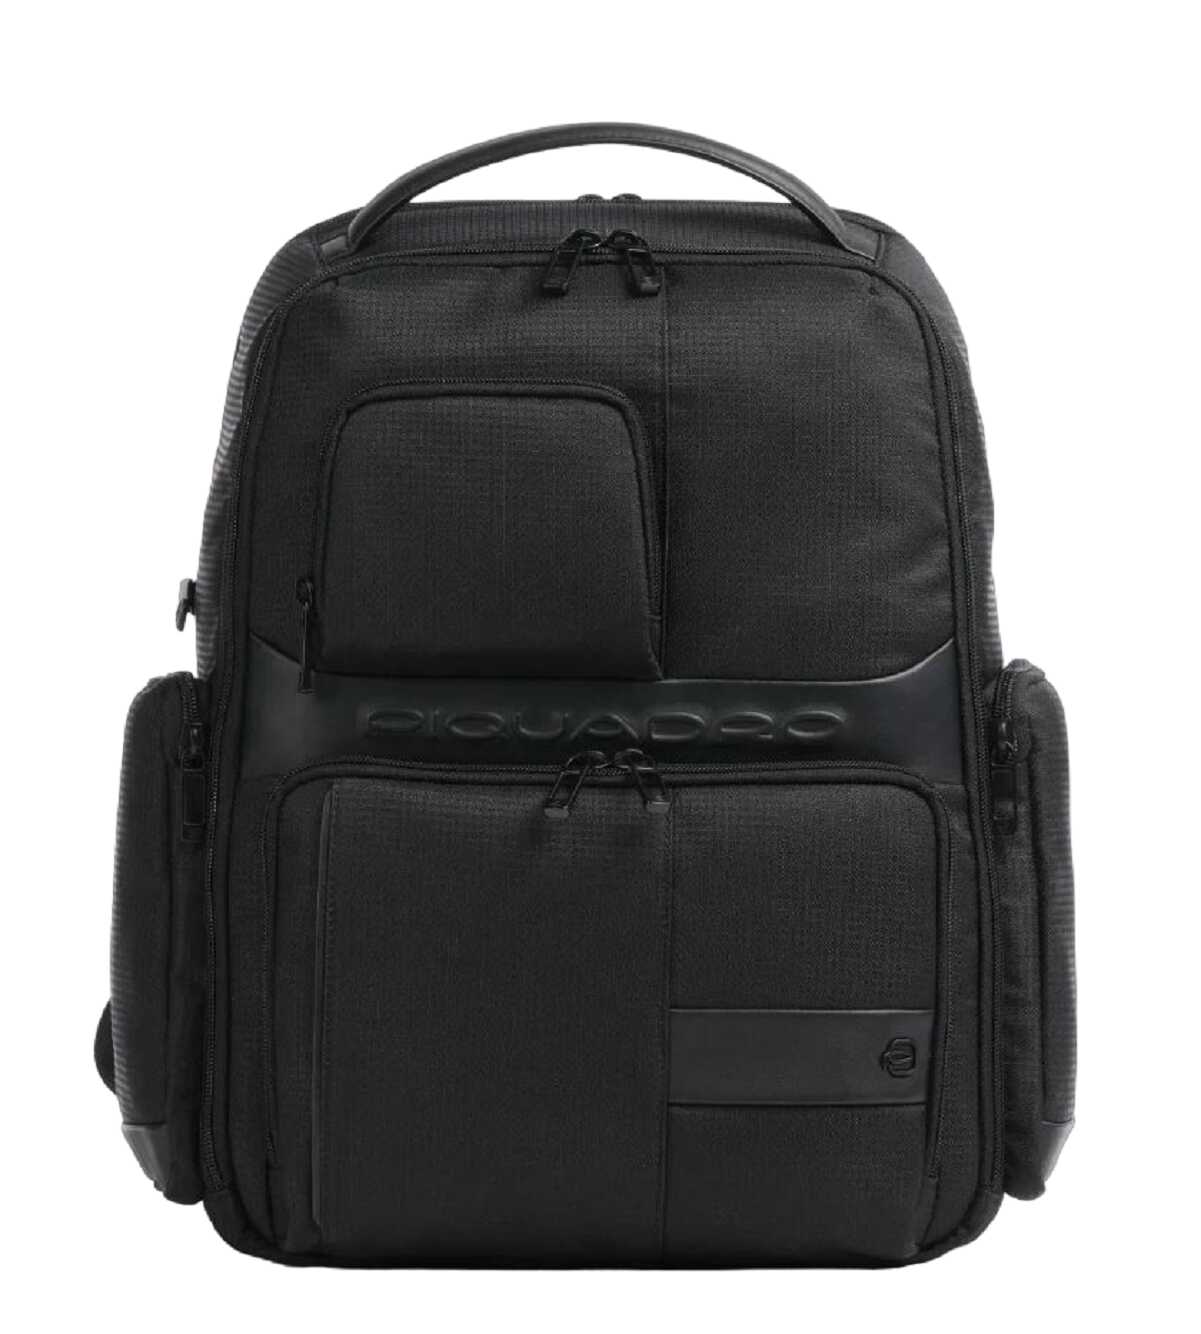 Piquadro Backpack By Piquadro Black